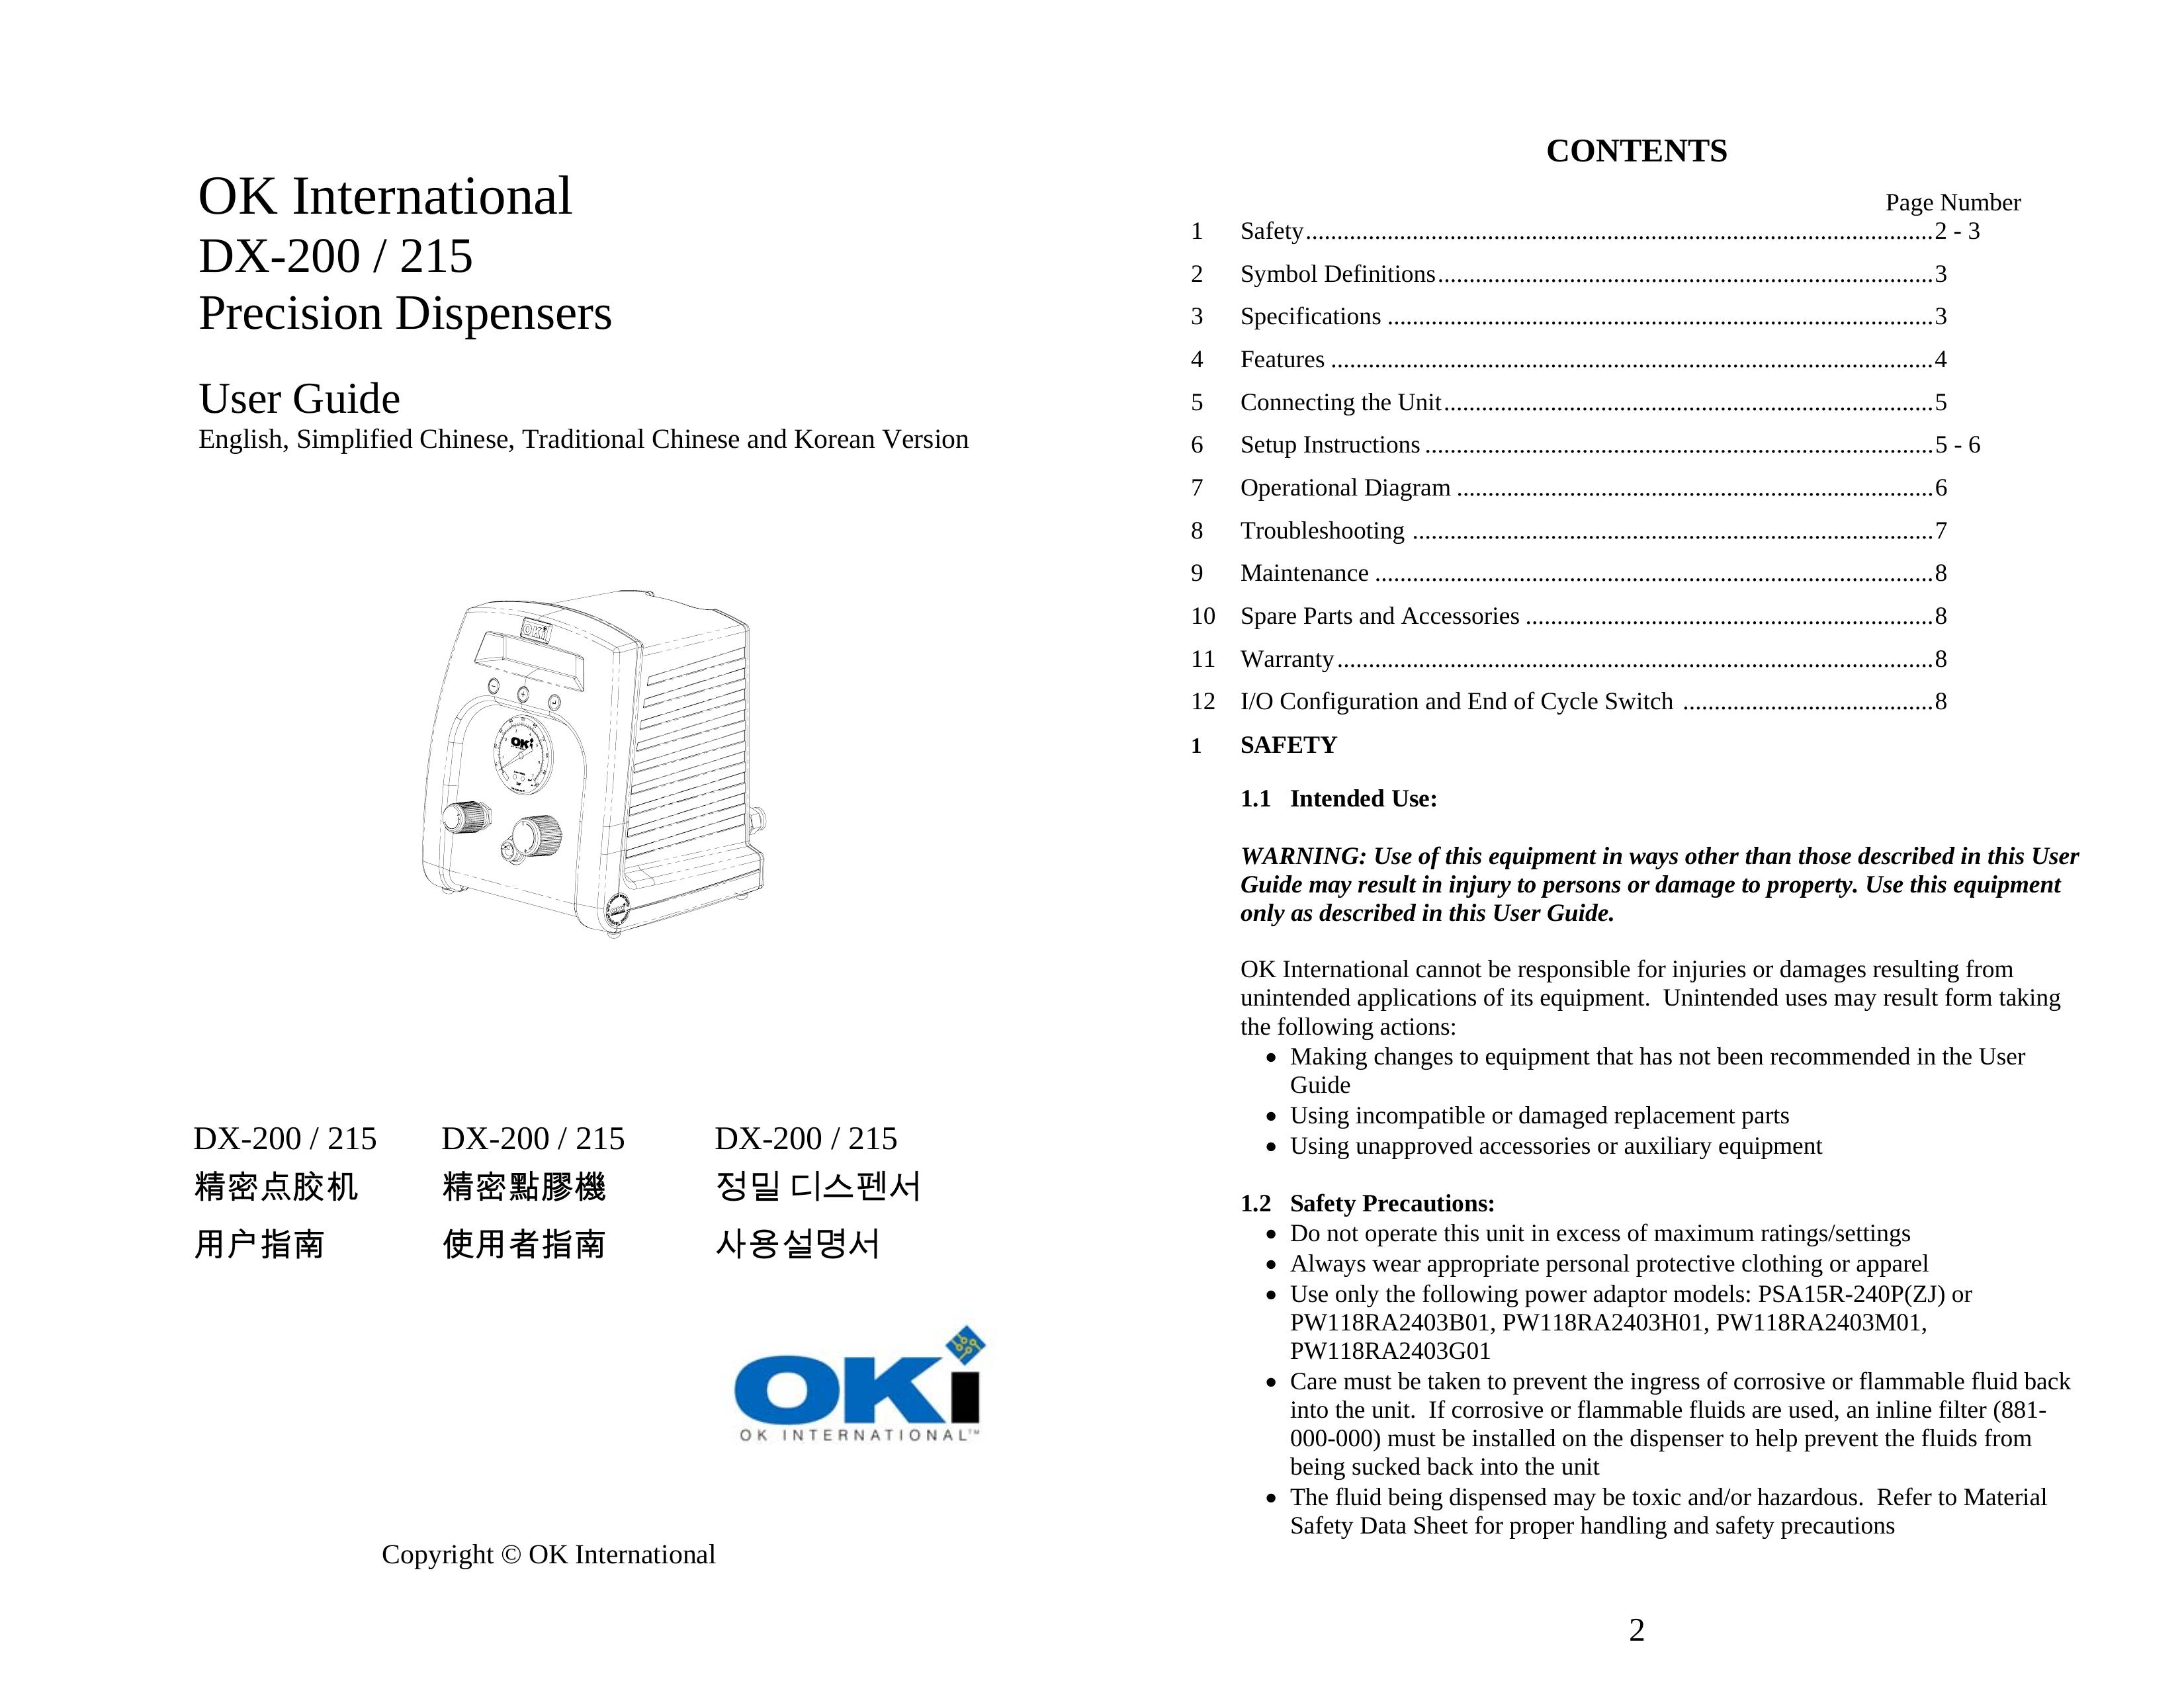 OK International DX-200/215 Water Dispenser User Manual